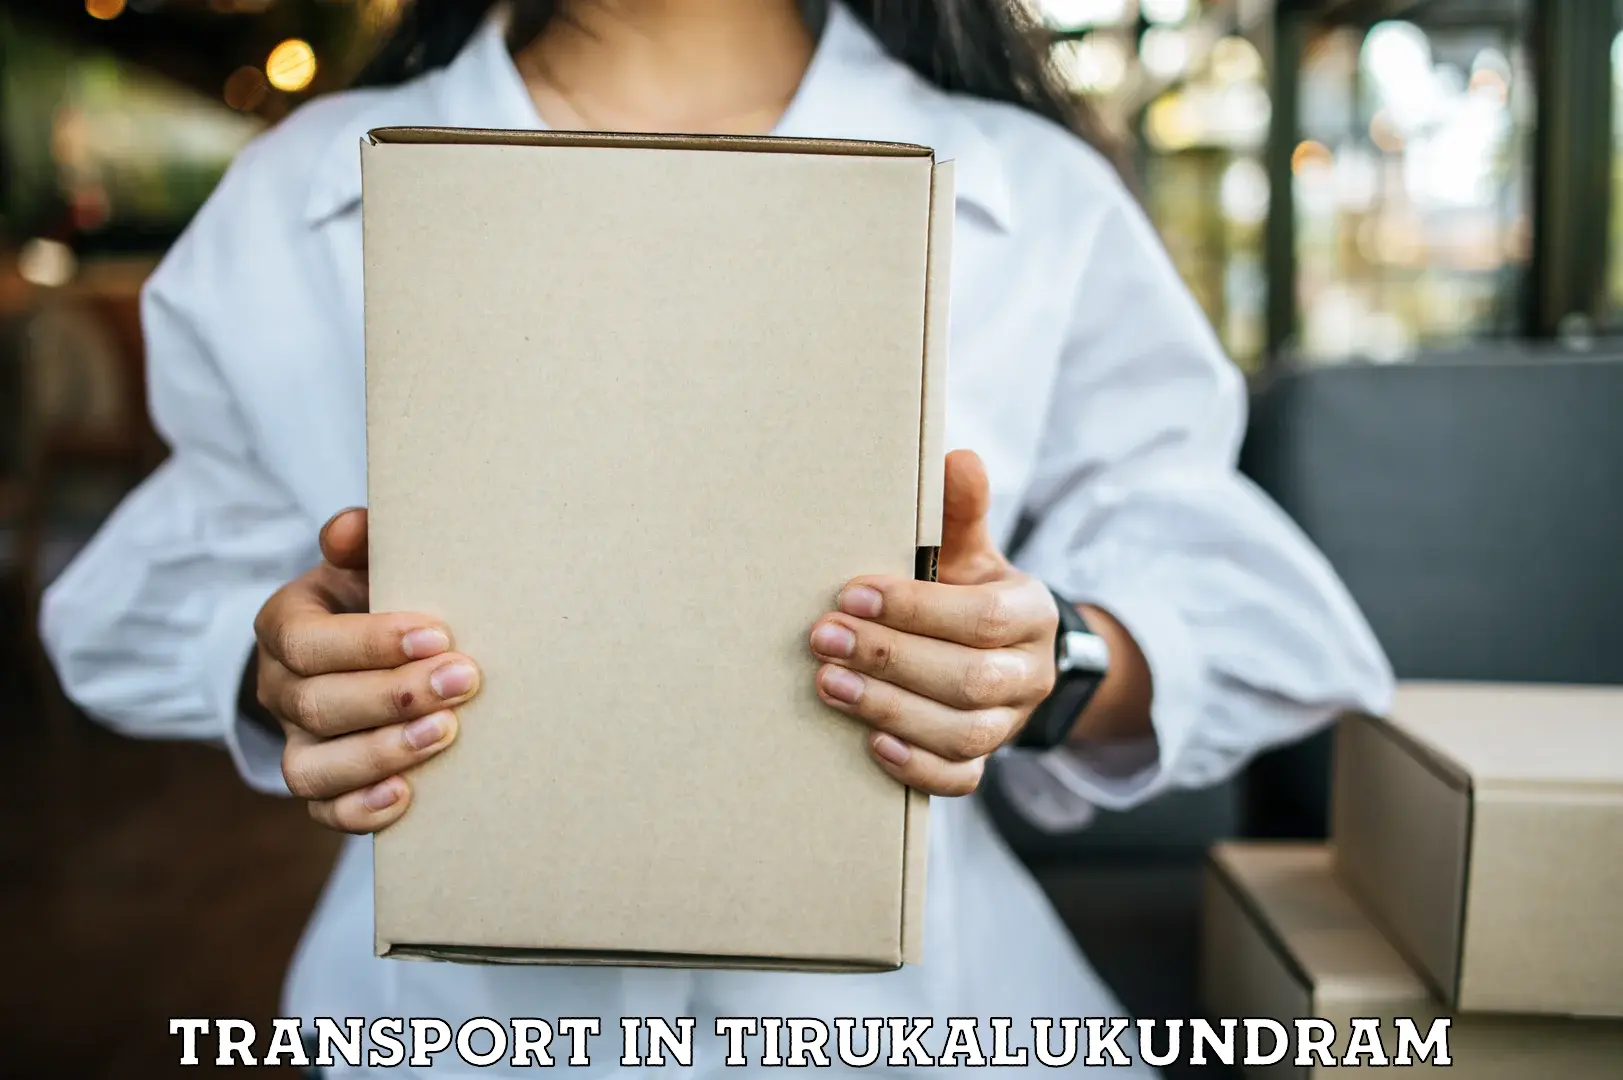 Online transport in Tirukalukundram